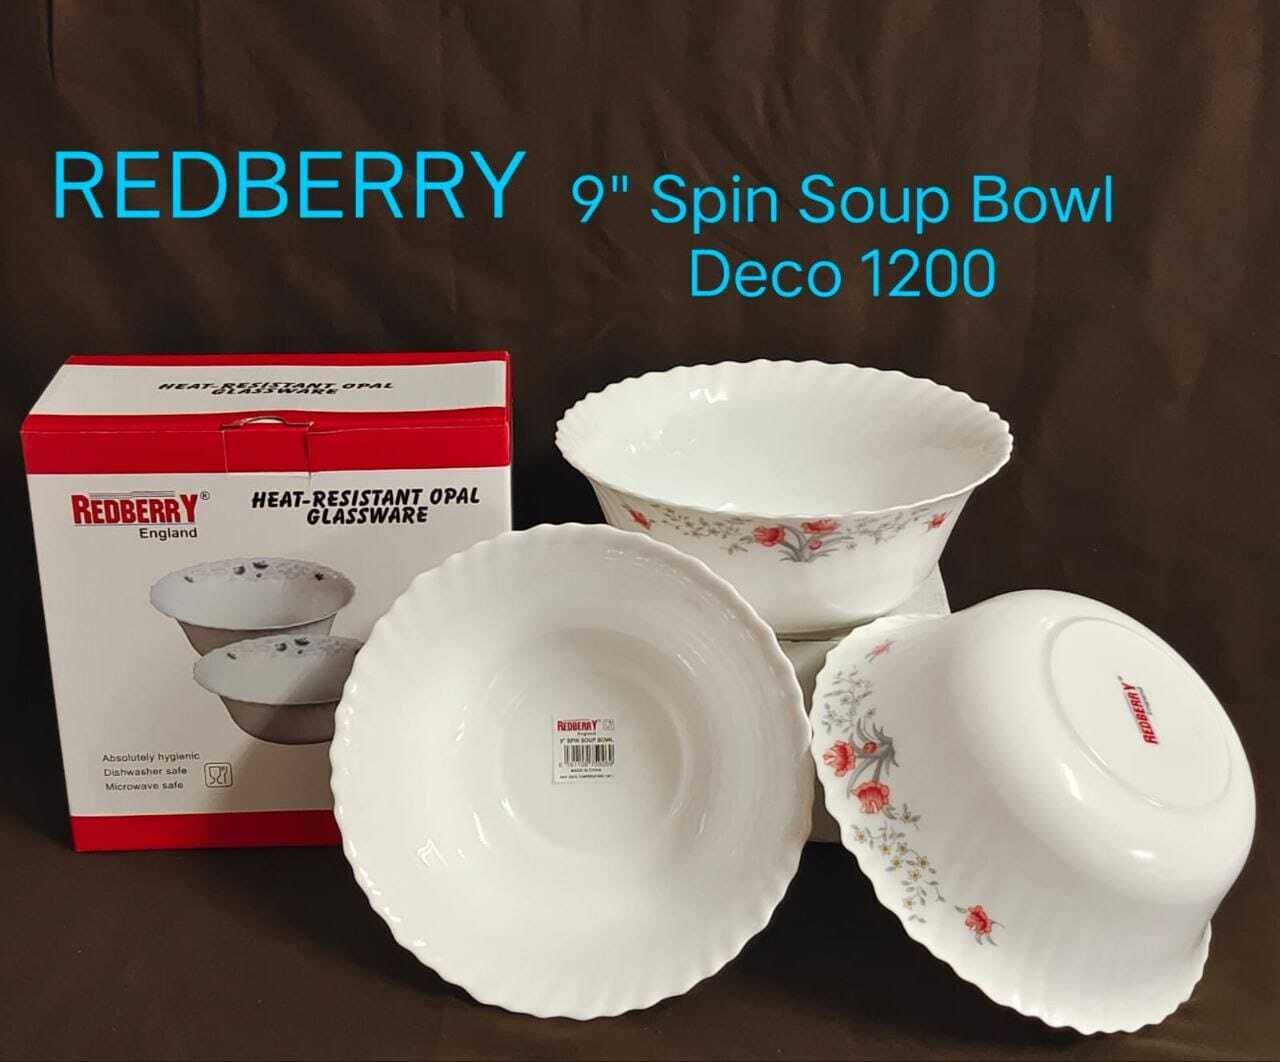 Serving bowls opal glass bowls 3pcs 9inches Redberry premium range #1200 spin bowl